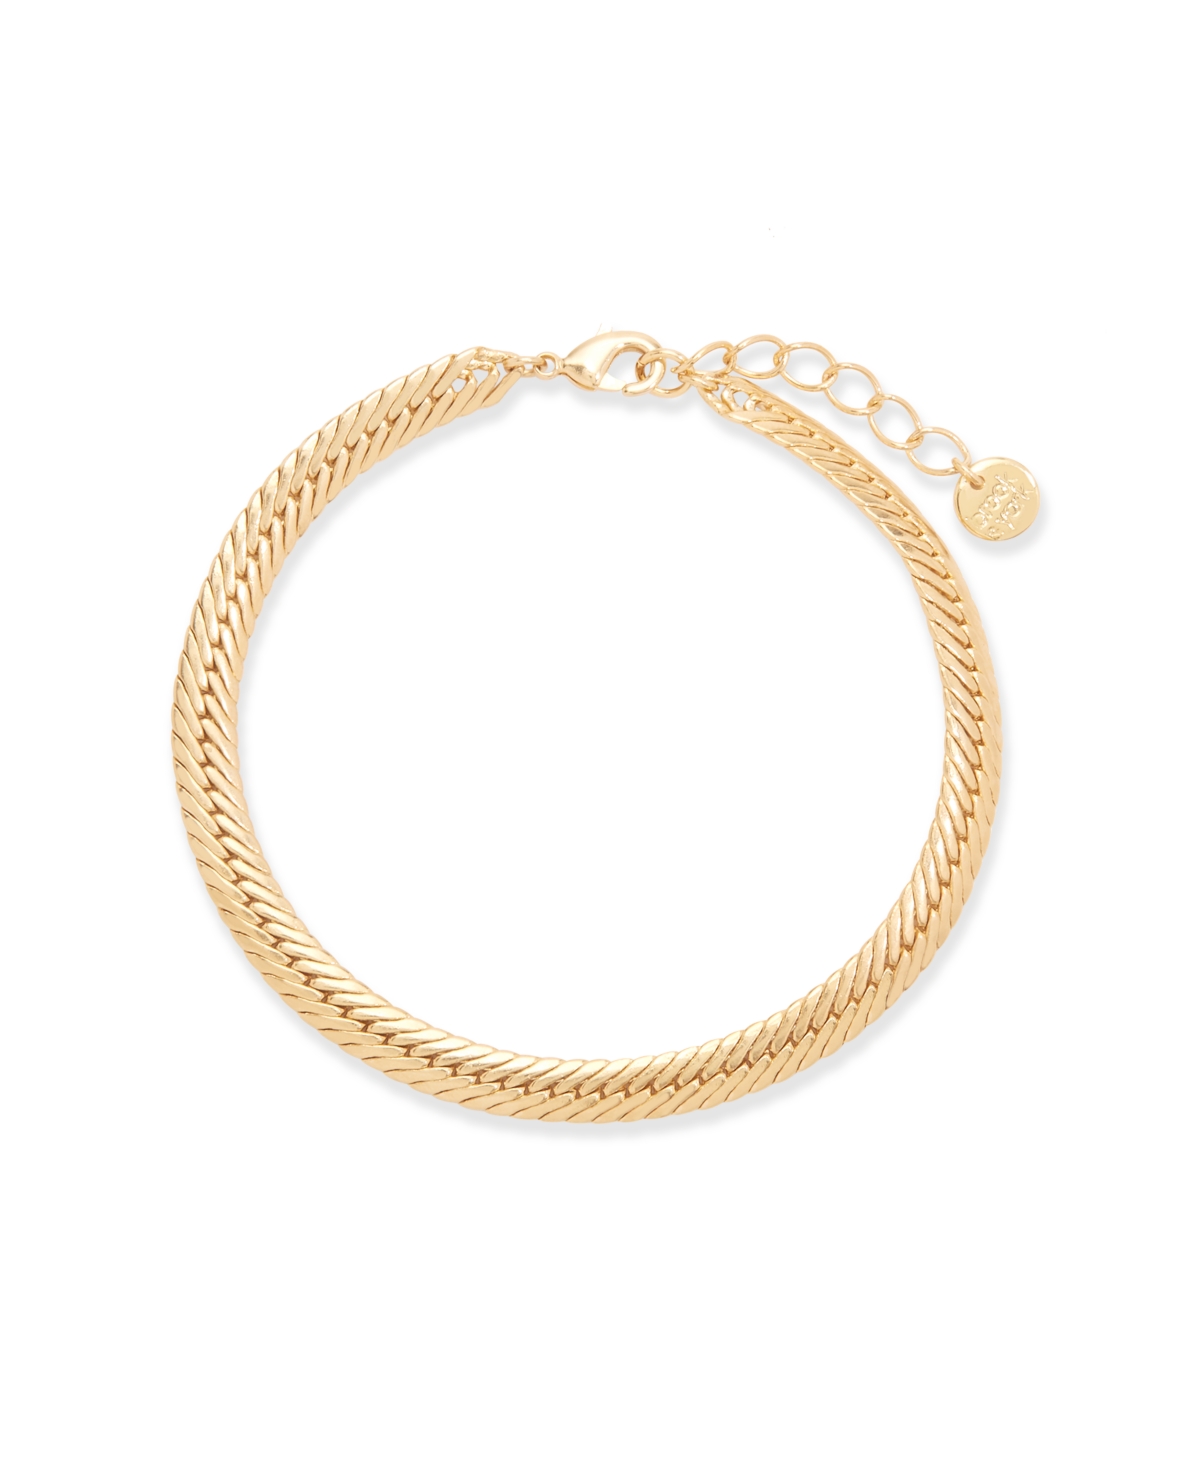 Brook & York 14k Gold-plated Wells Chain Bracelet